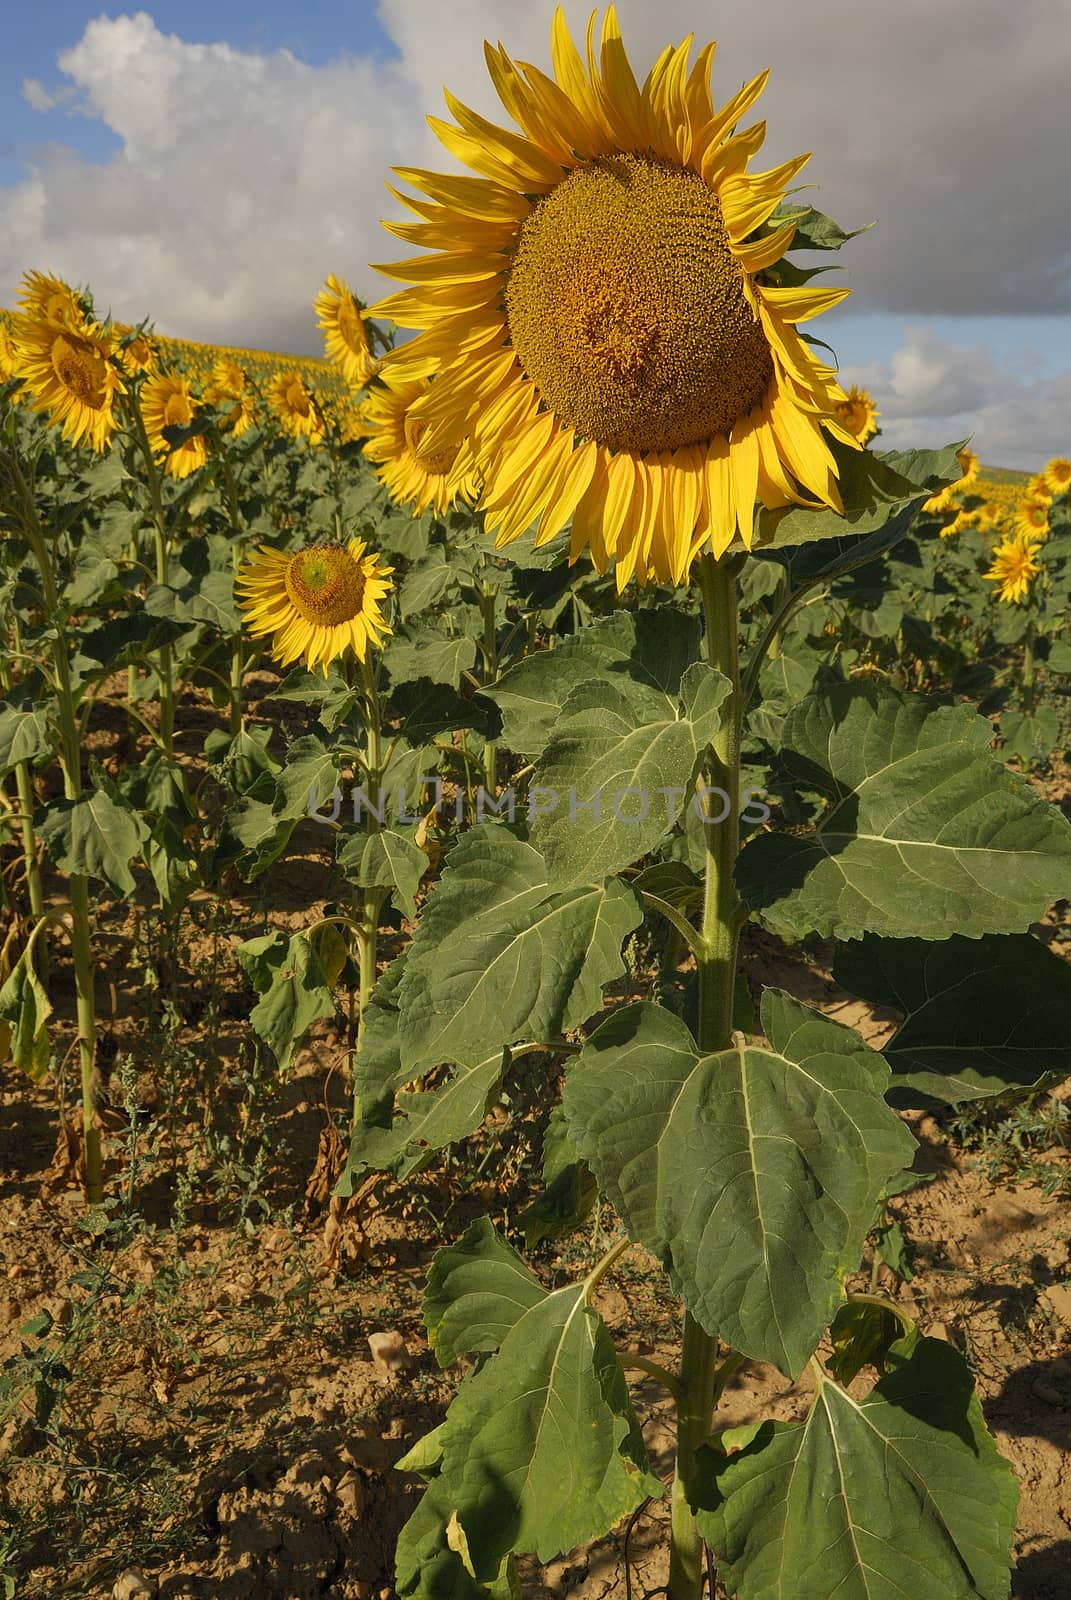 Helianthus annus, Sunflower, Allergens Plants by jalonsohu@gmail.com